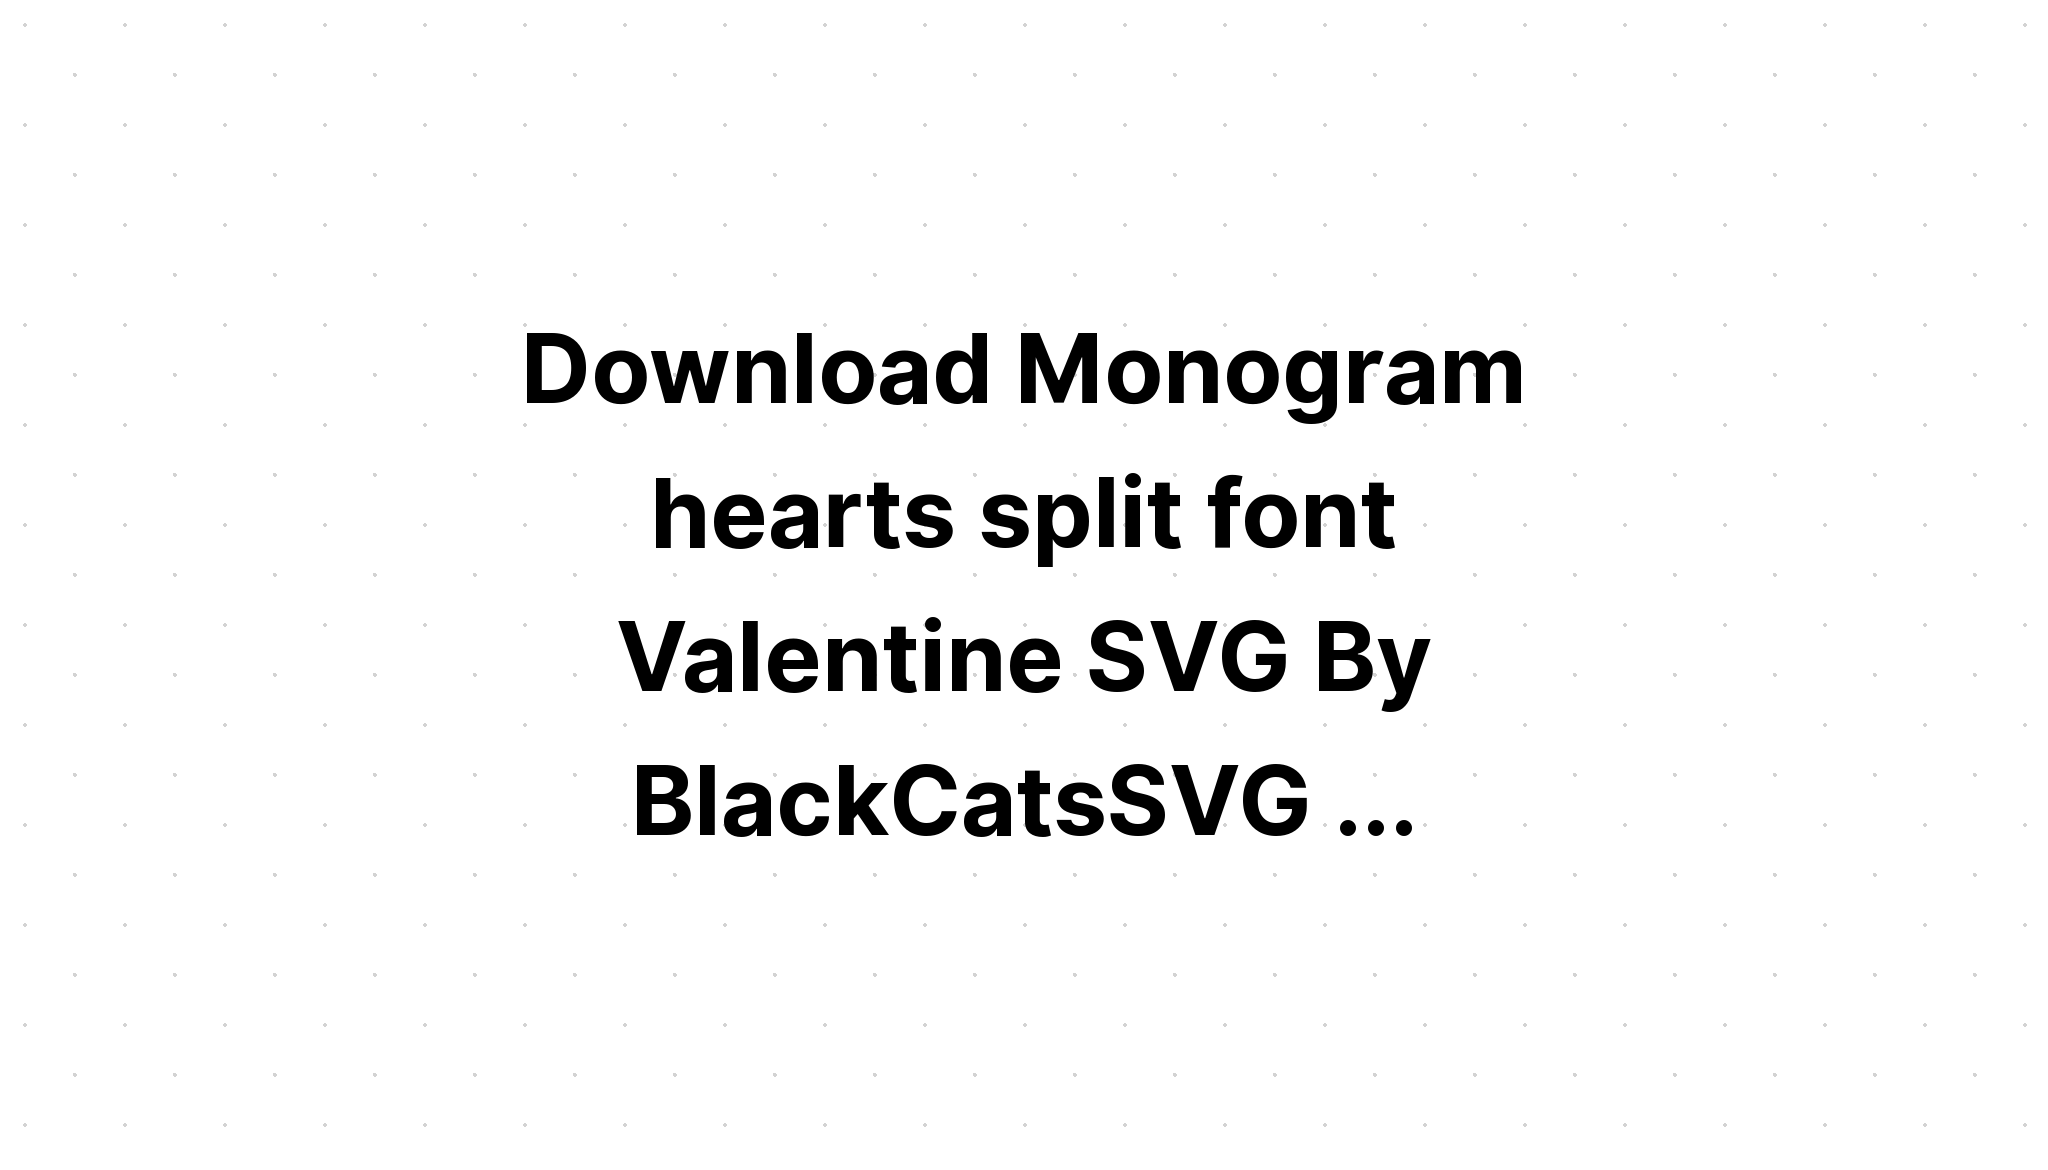 Download Valentine Monogram Svg Heart Monograms - Layered SVG Cut File